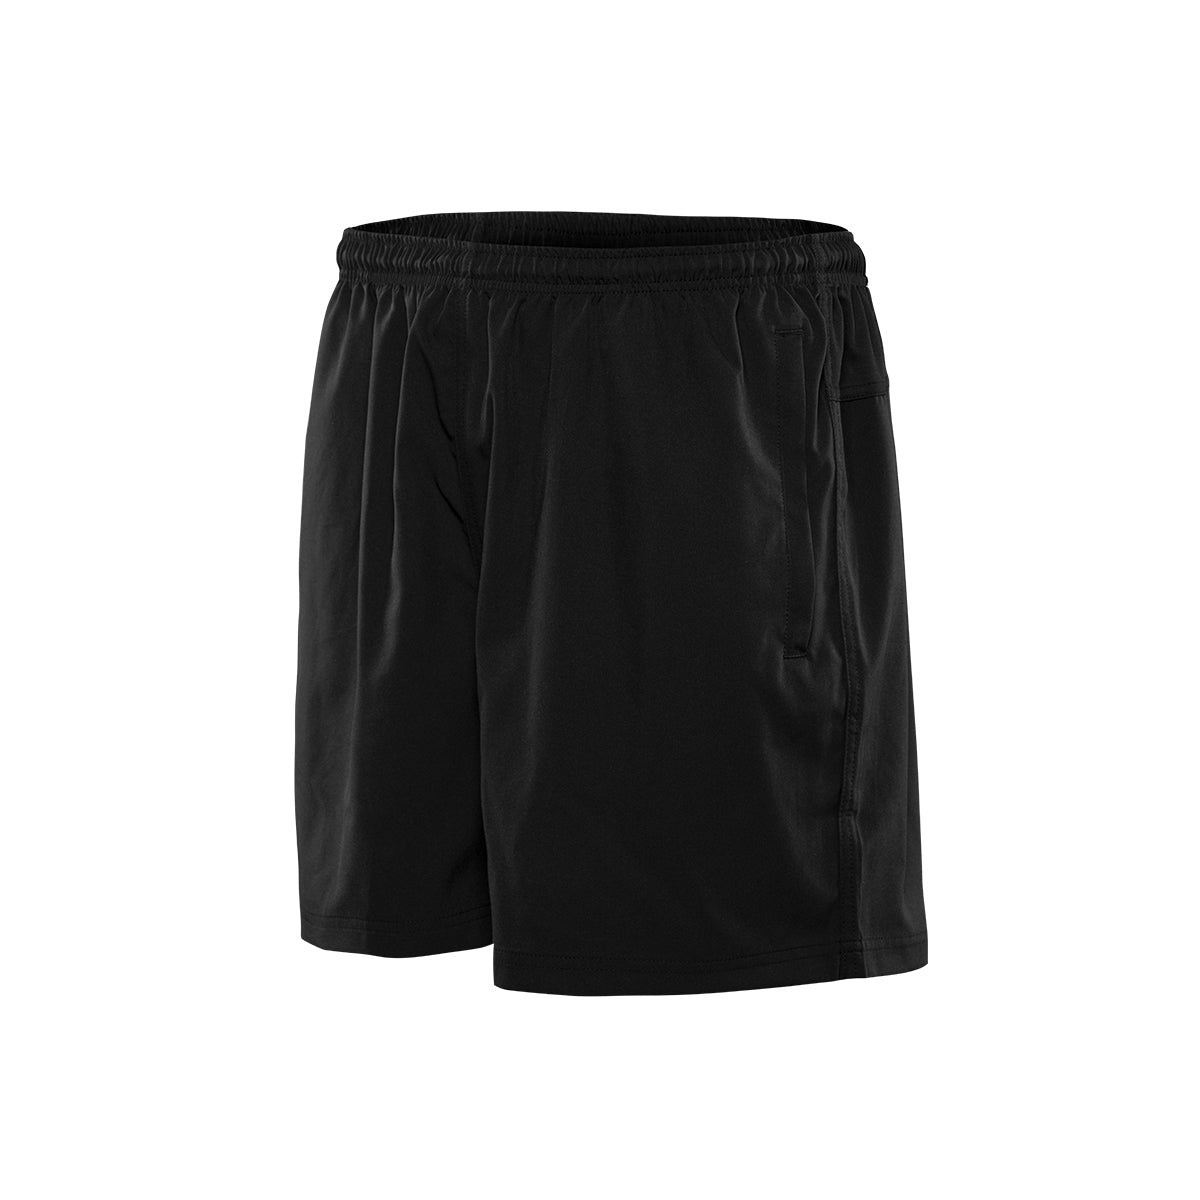 DS Mens Black Gym Shorts